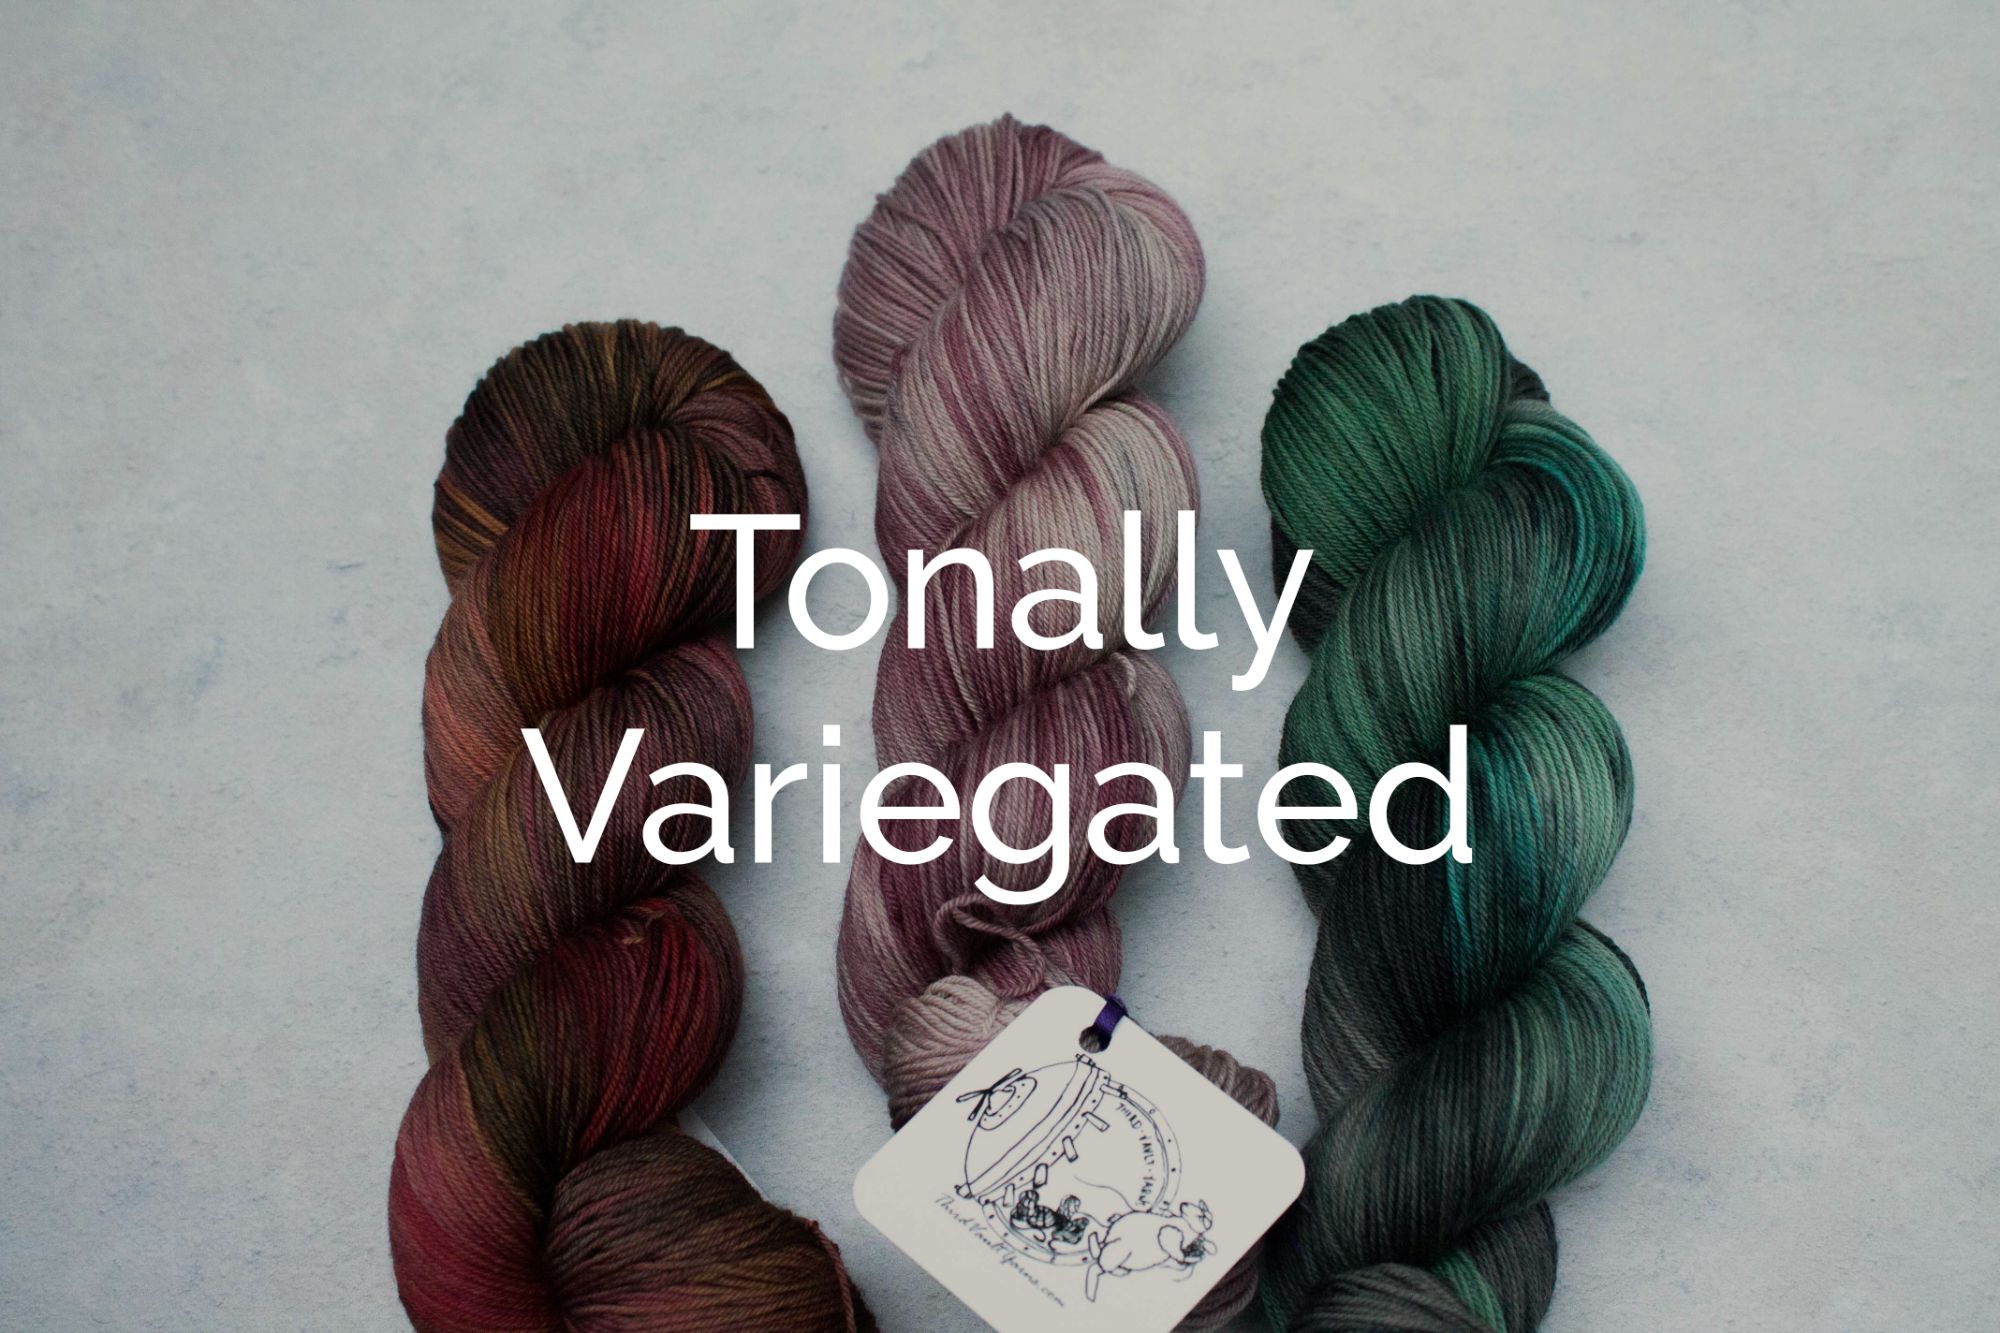 Shop our Tonally variegated yarns